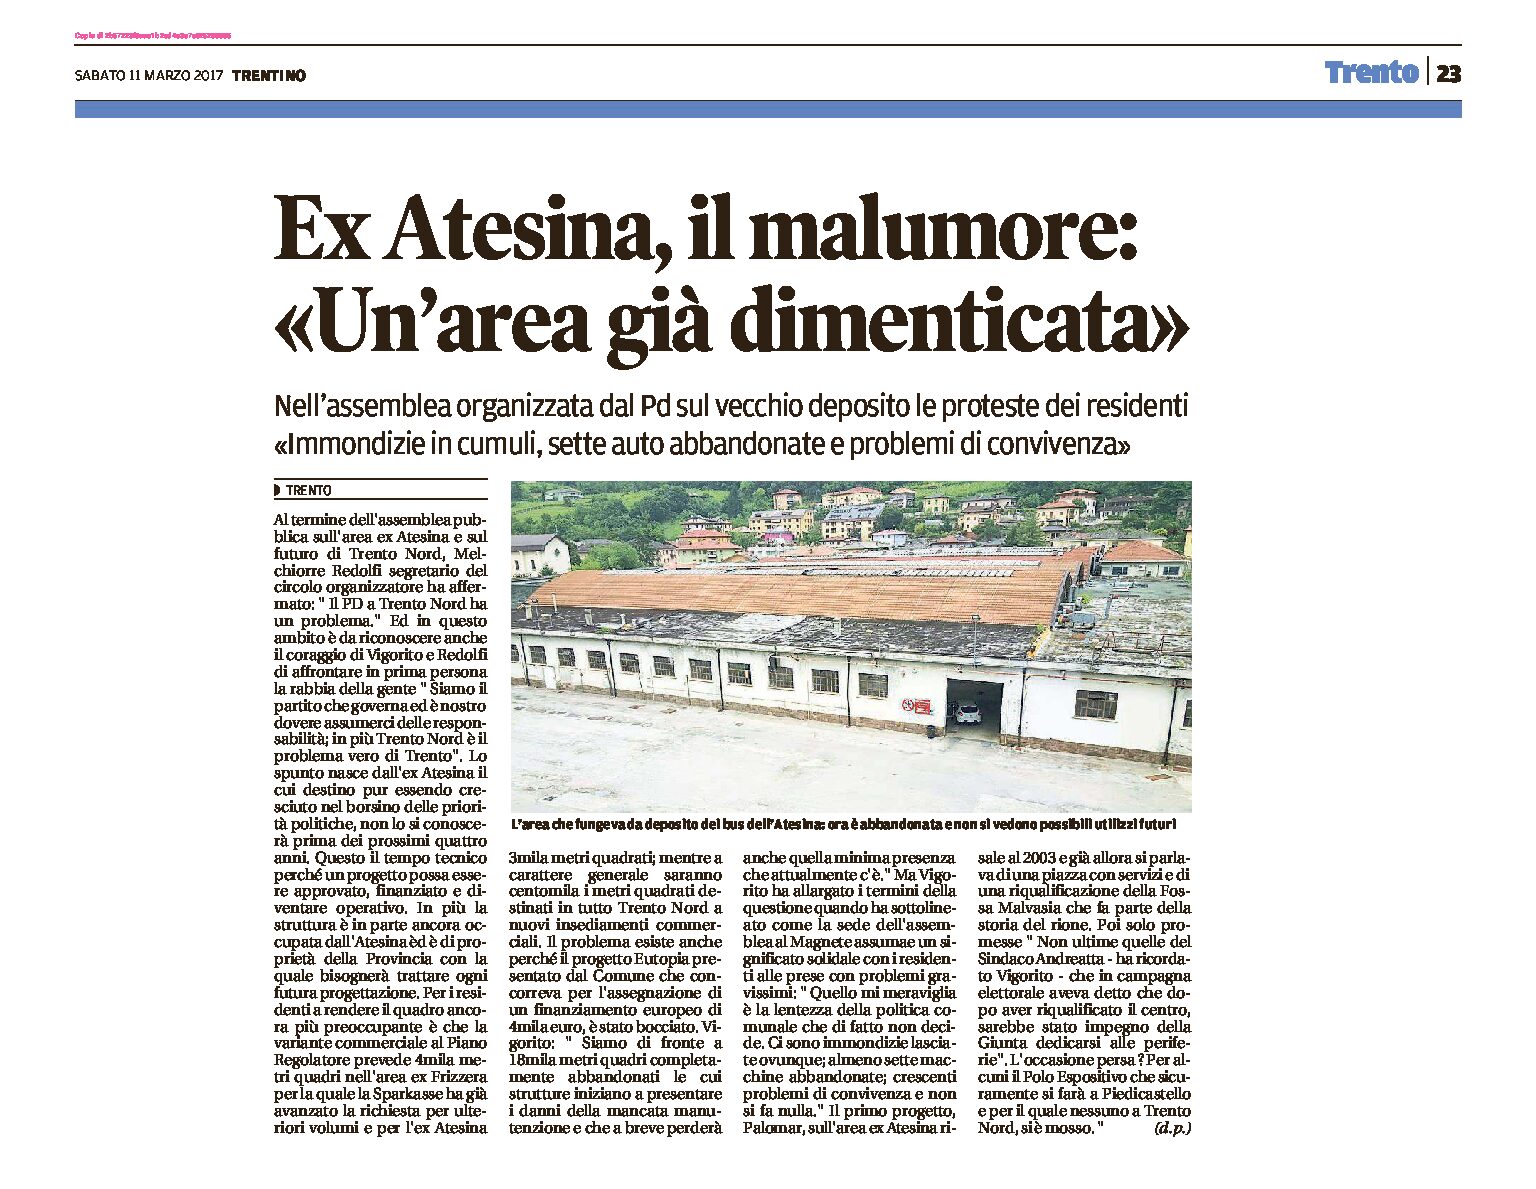 Trento, ex Atesina: un’area già dimenticata